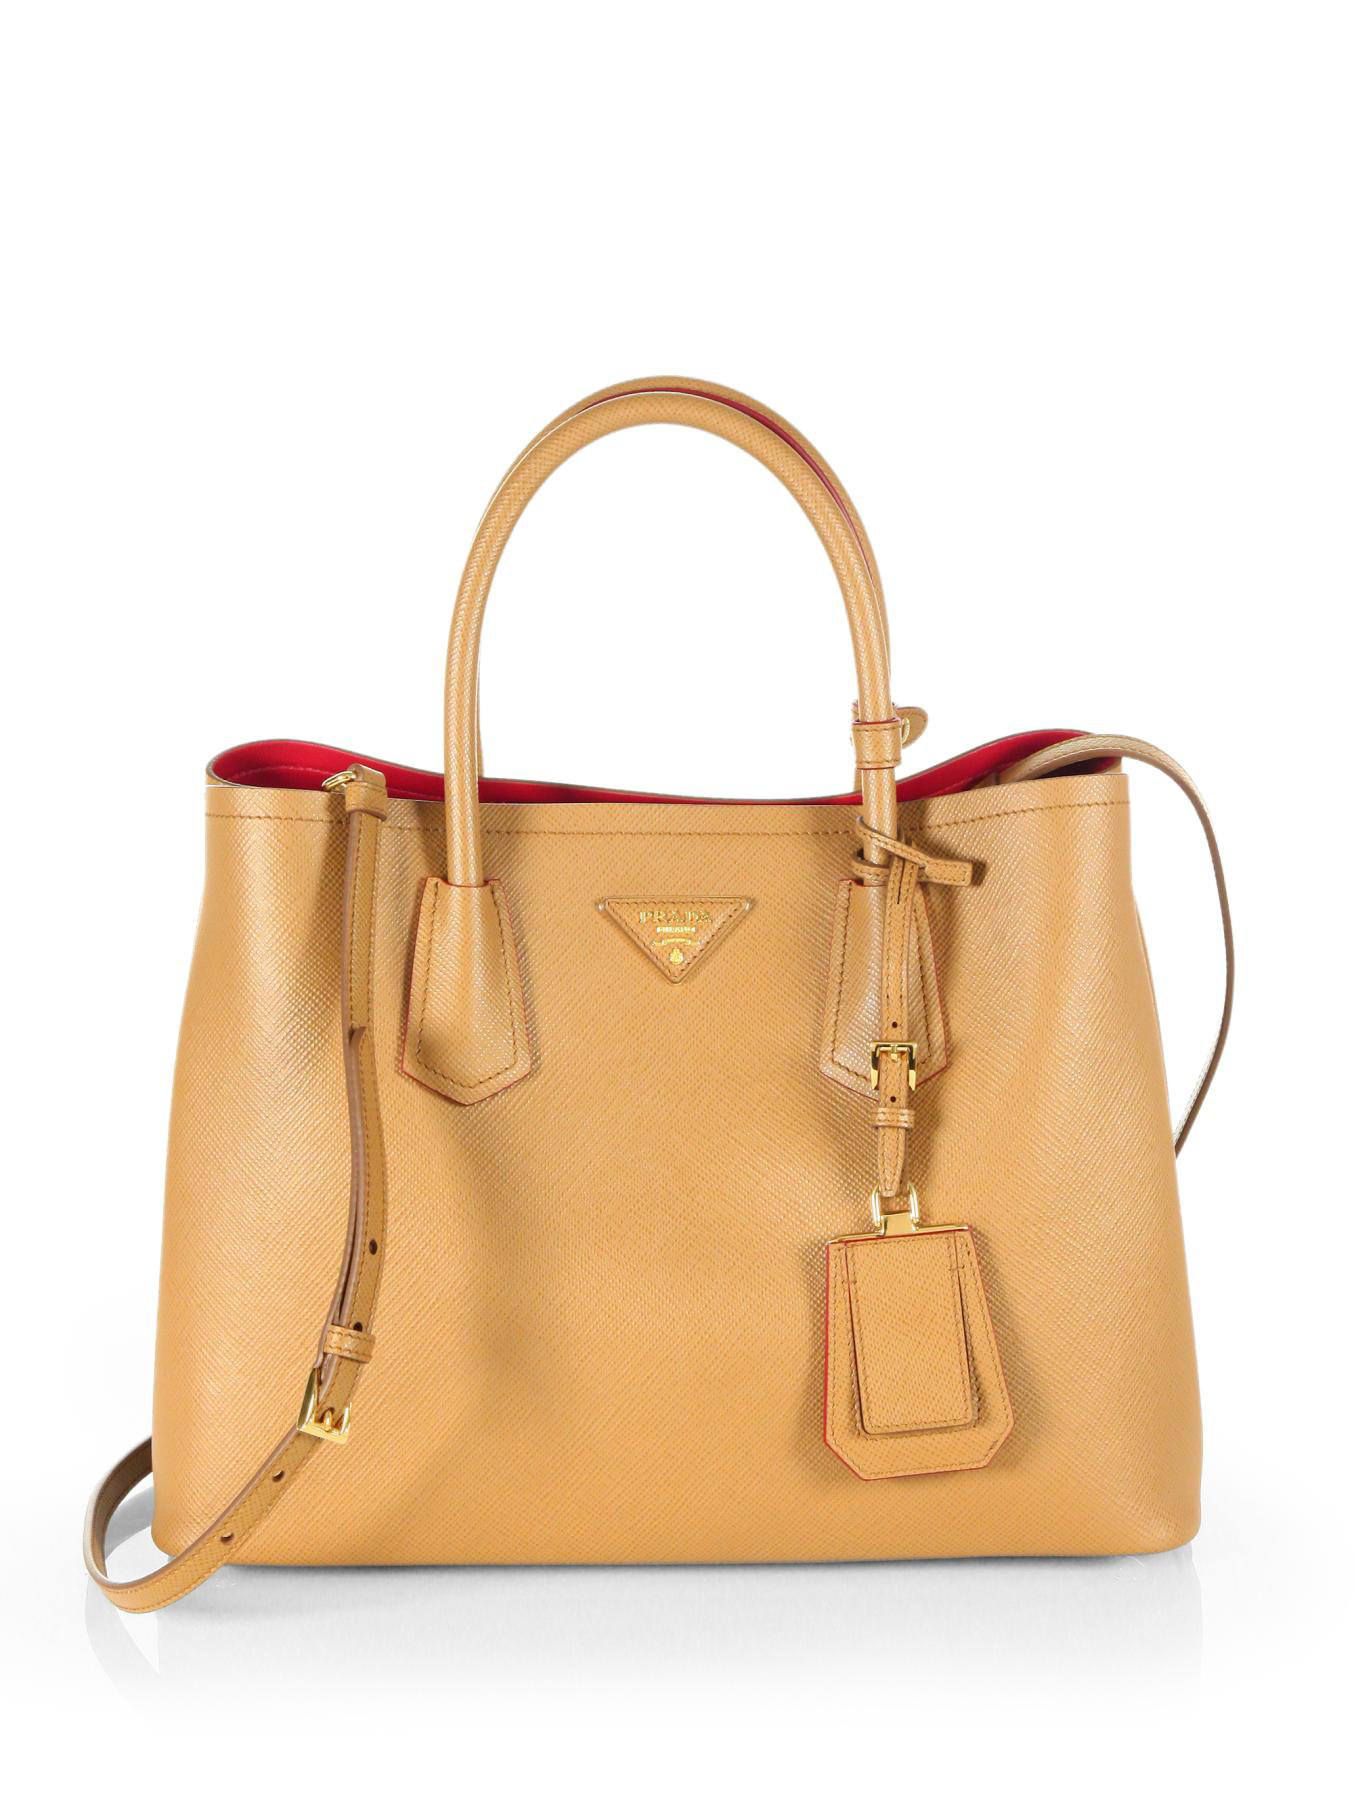 prada red leather handbag - Prada Saffiano Cuir Small Double Bag in Brown (CARAMELLO-CARAMEL ...